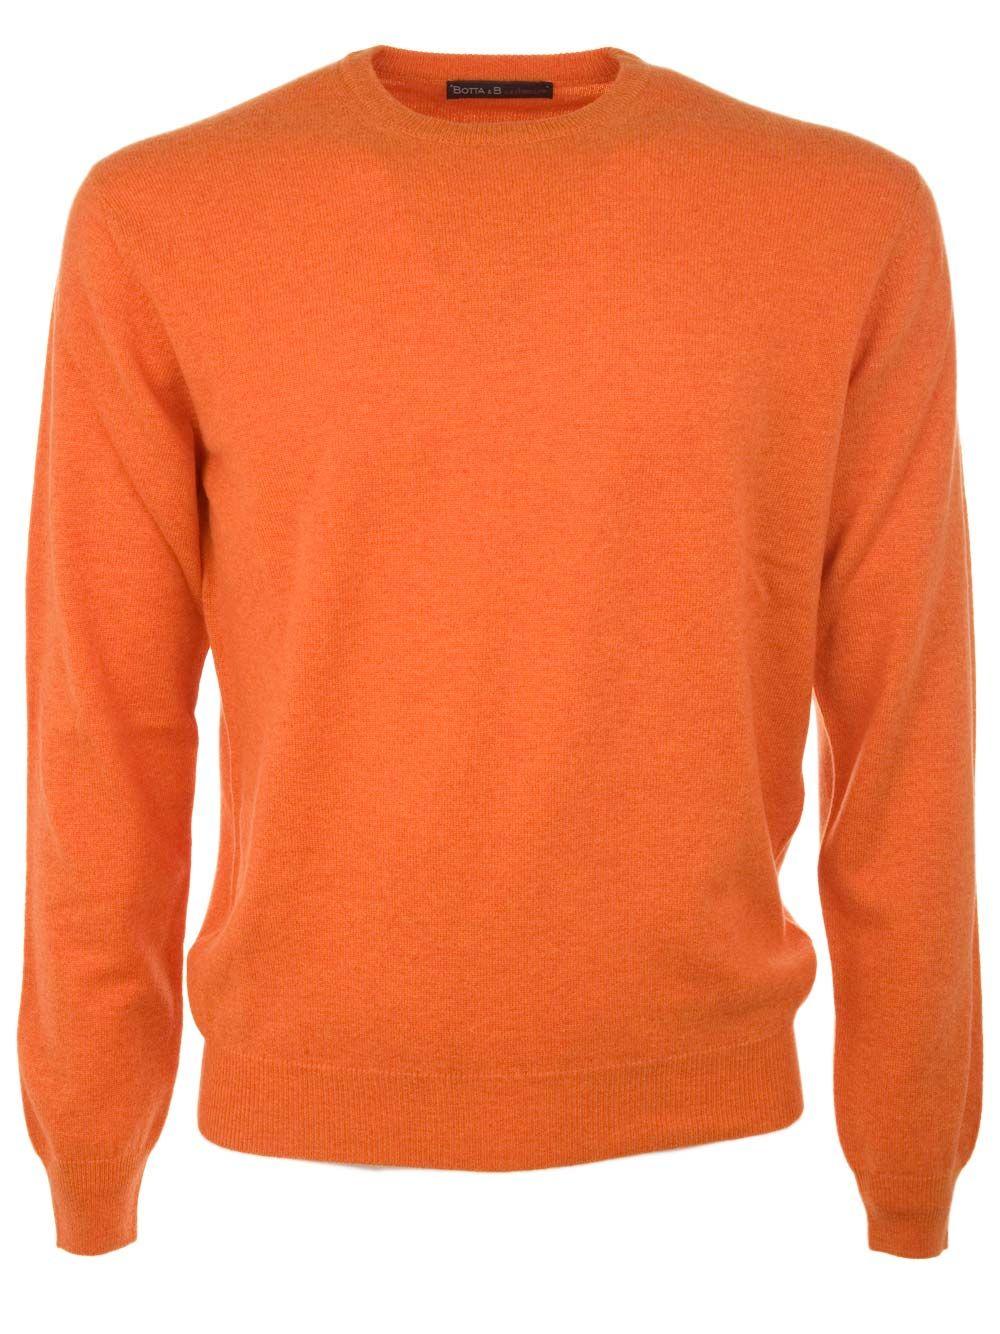 Ones Orange Cashmere Sweater for Men - Lyst